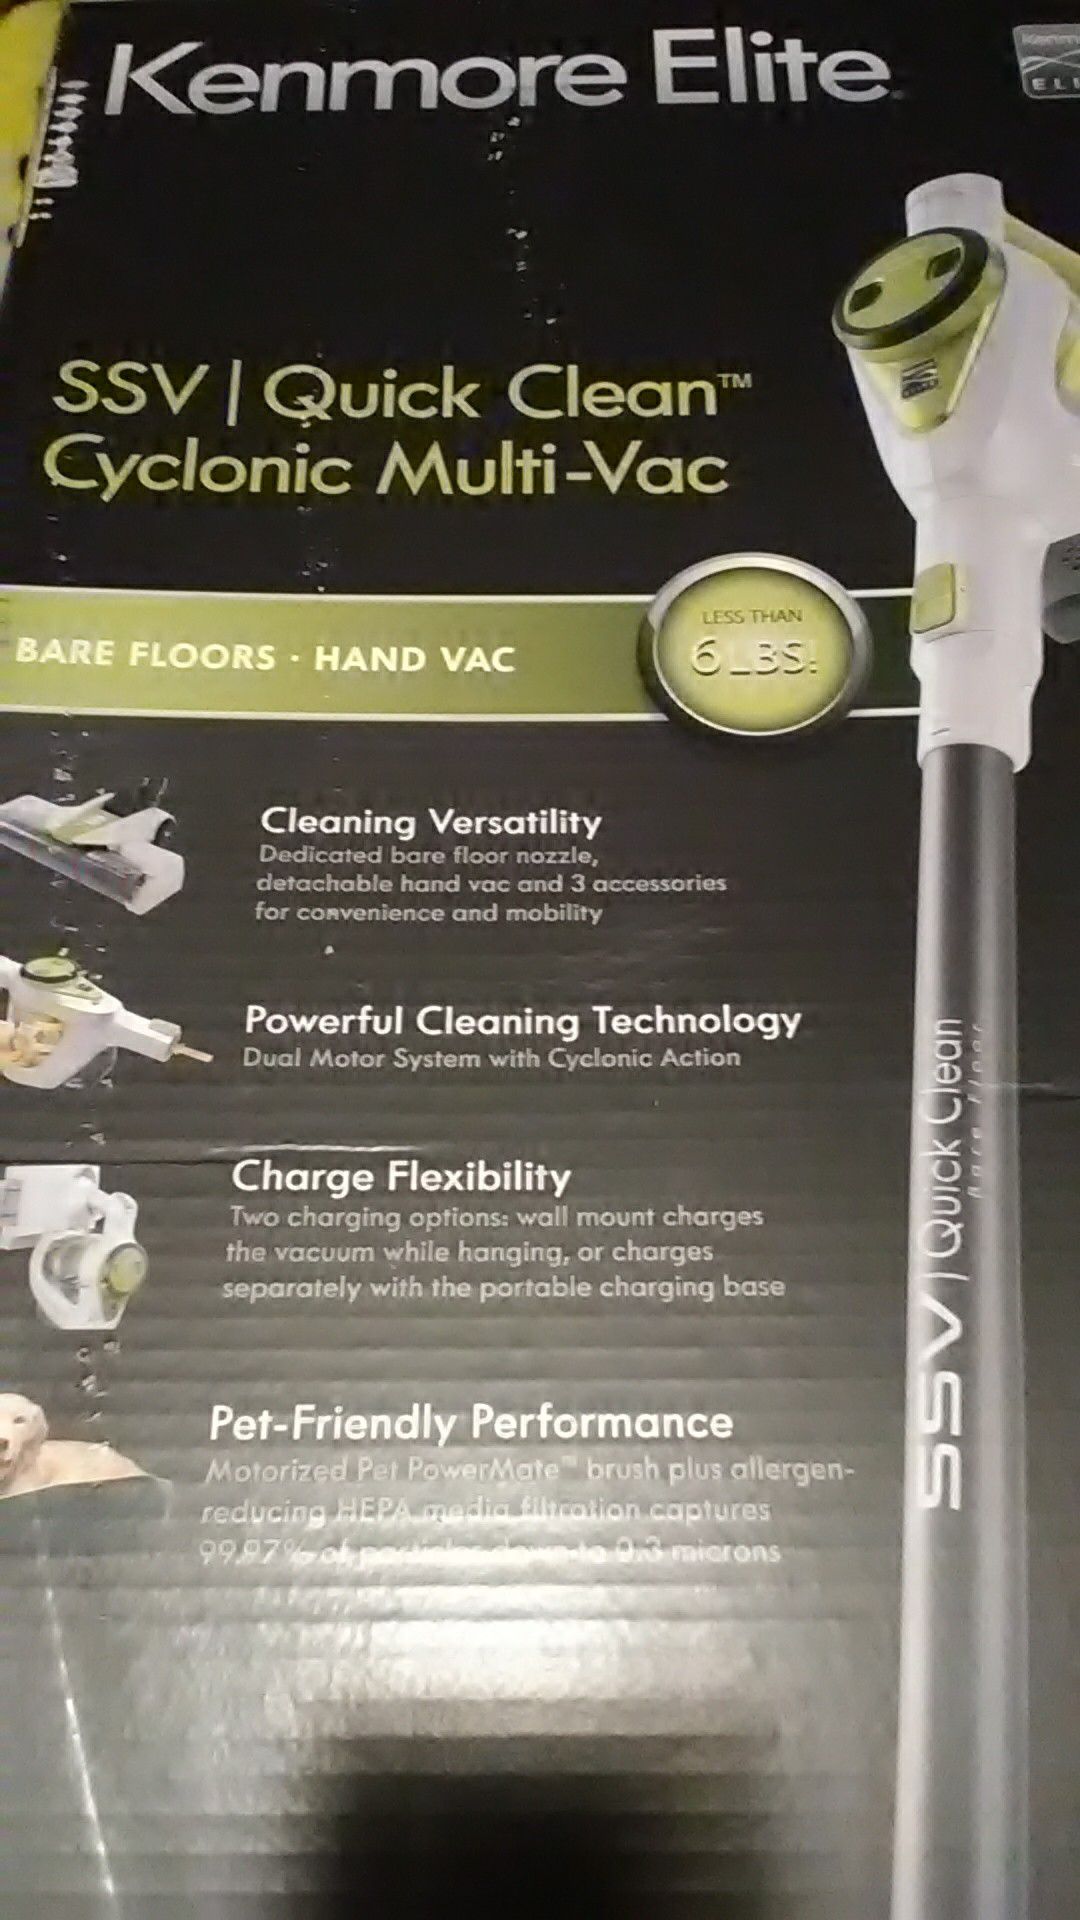 Kenmore Elite SSV Quick Clean Cyclonic Vacuum